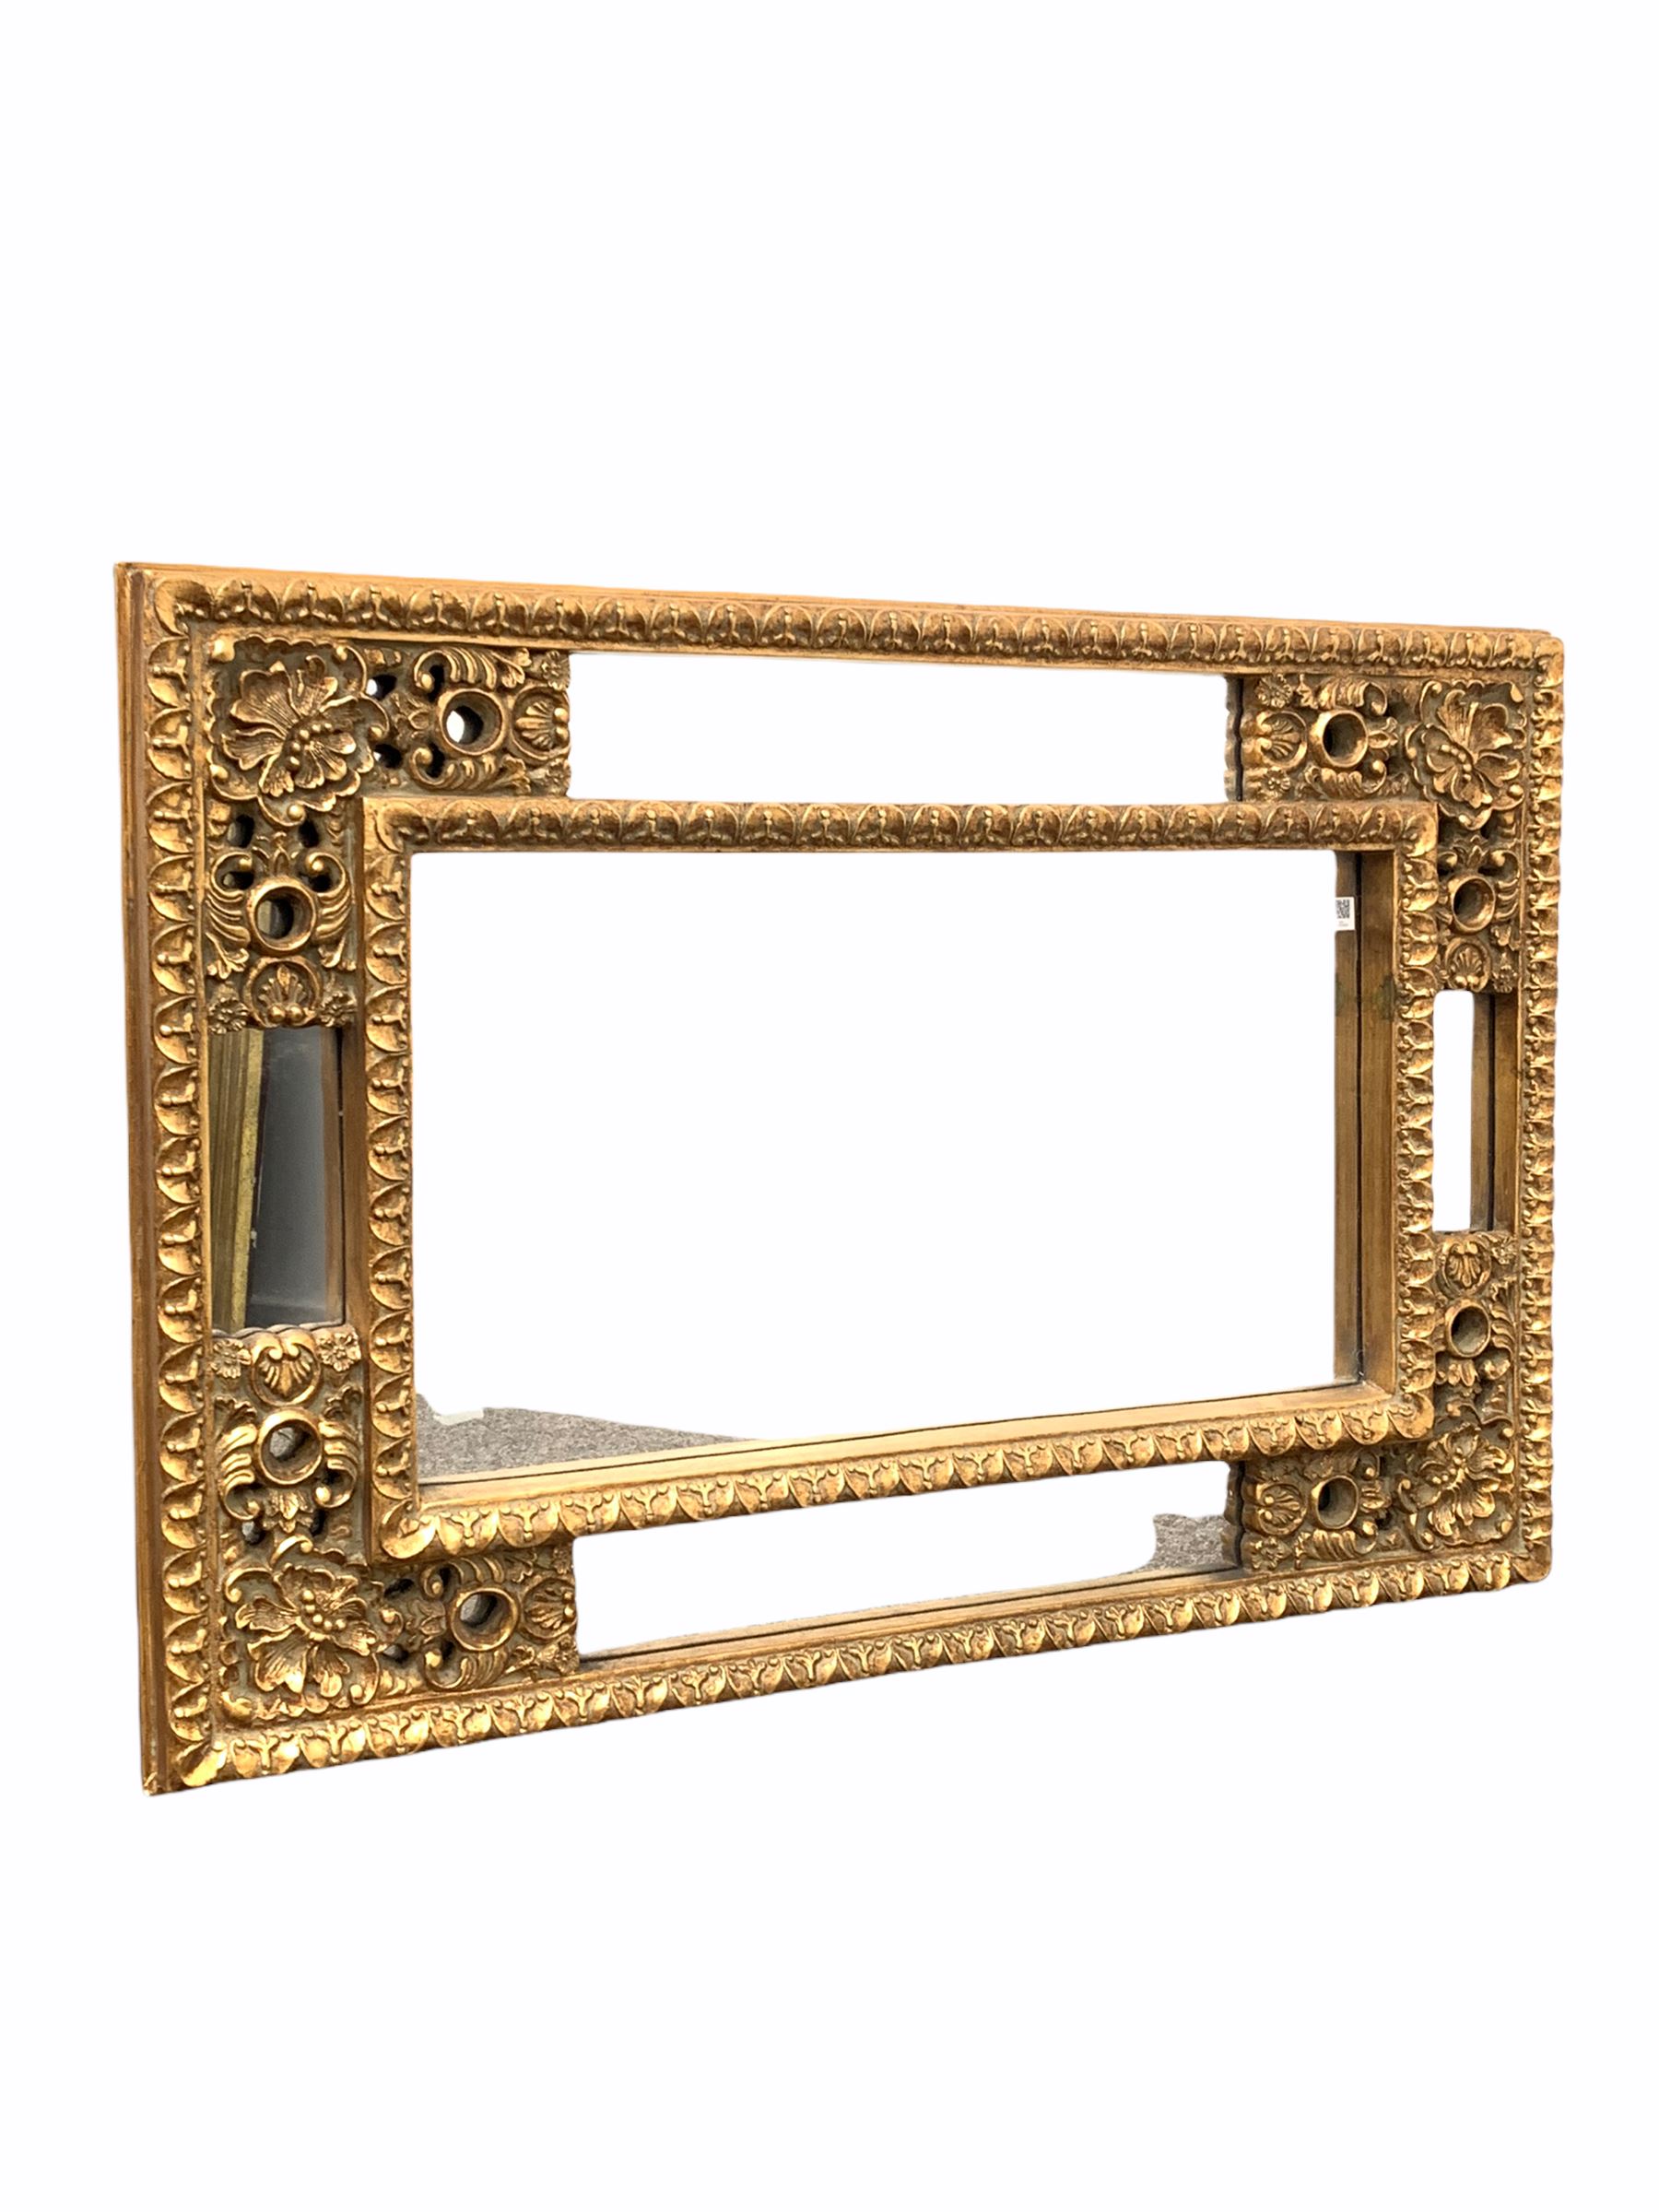 Classical design gilt framed wall hanging mirror 97cm x 66cm